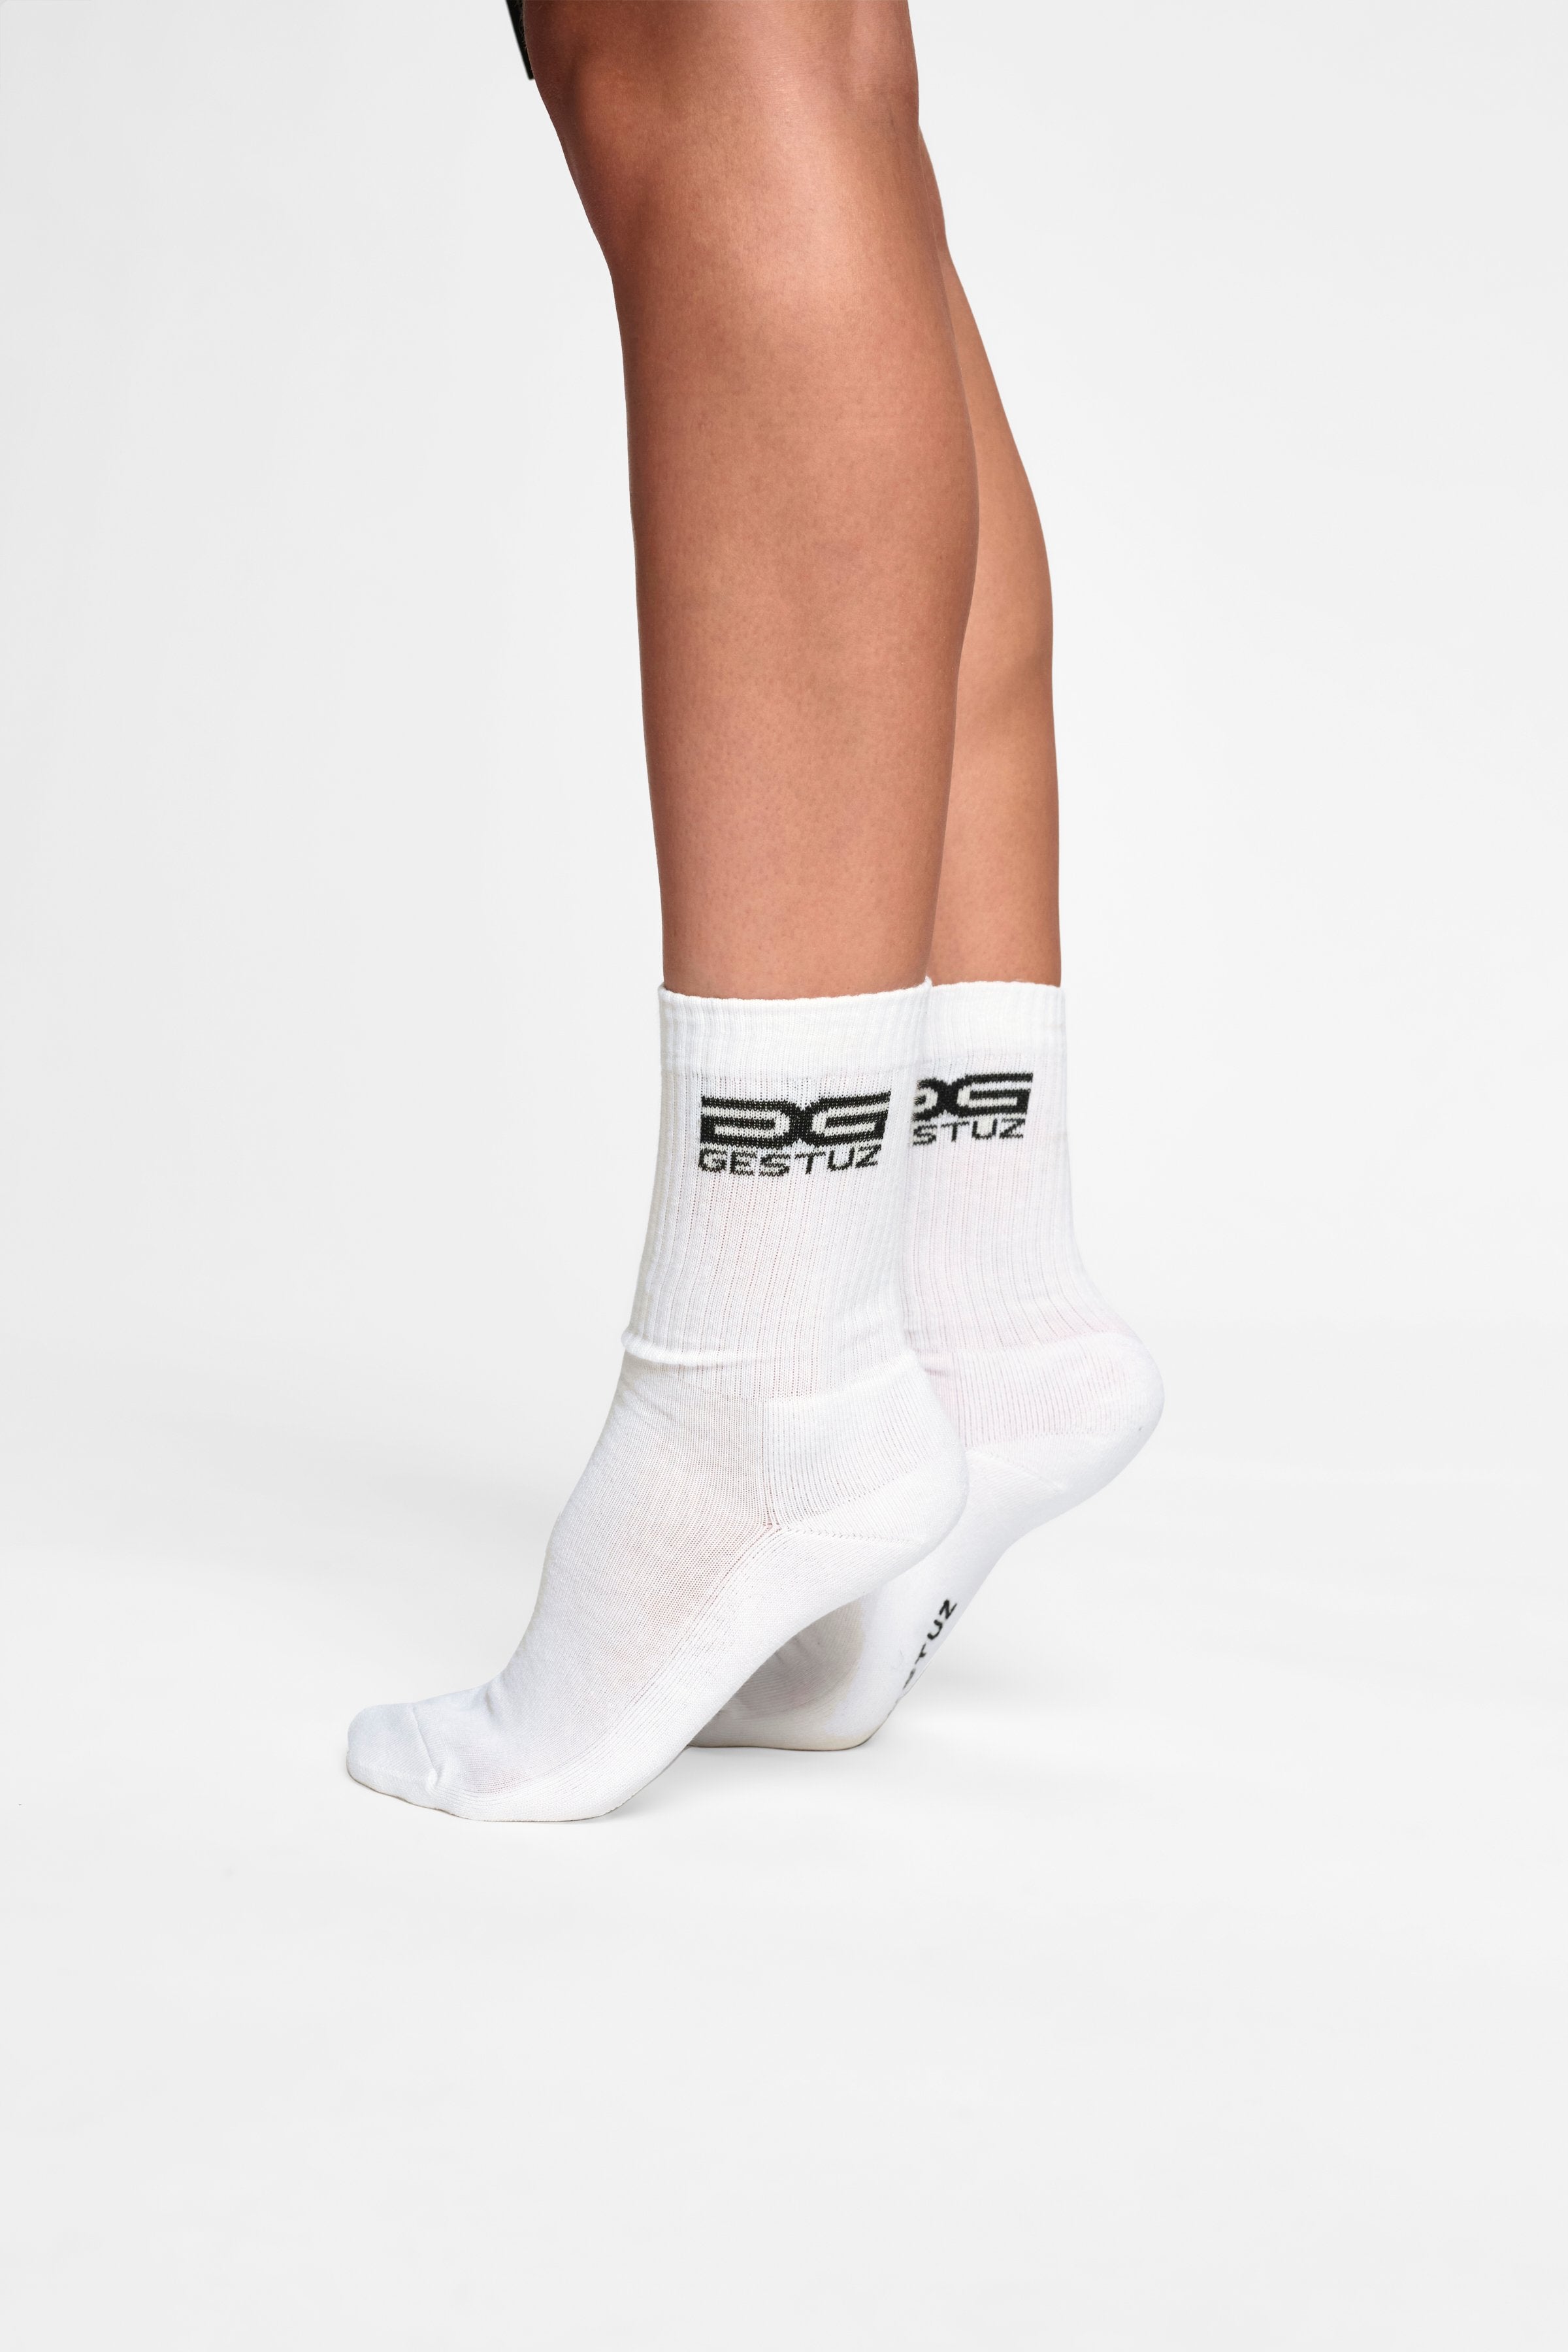 Gestuz New Logo Socks - Bright White